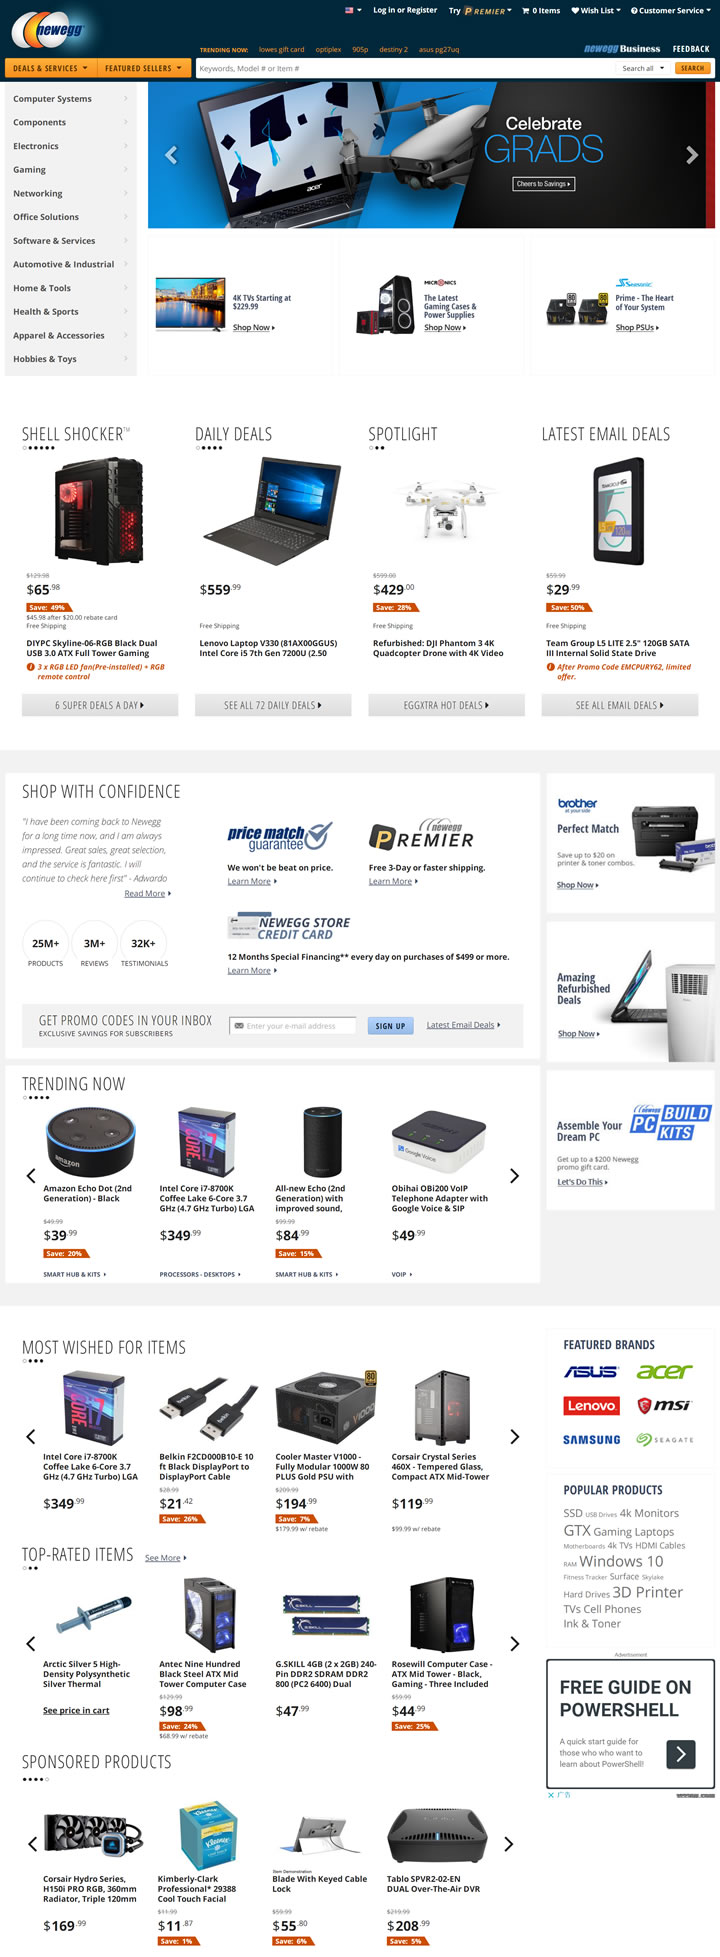 North American Leading Electronics Retailer: Newegg.com